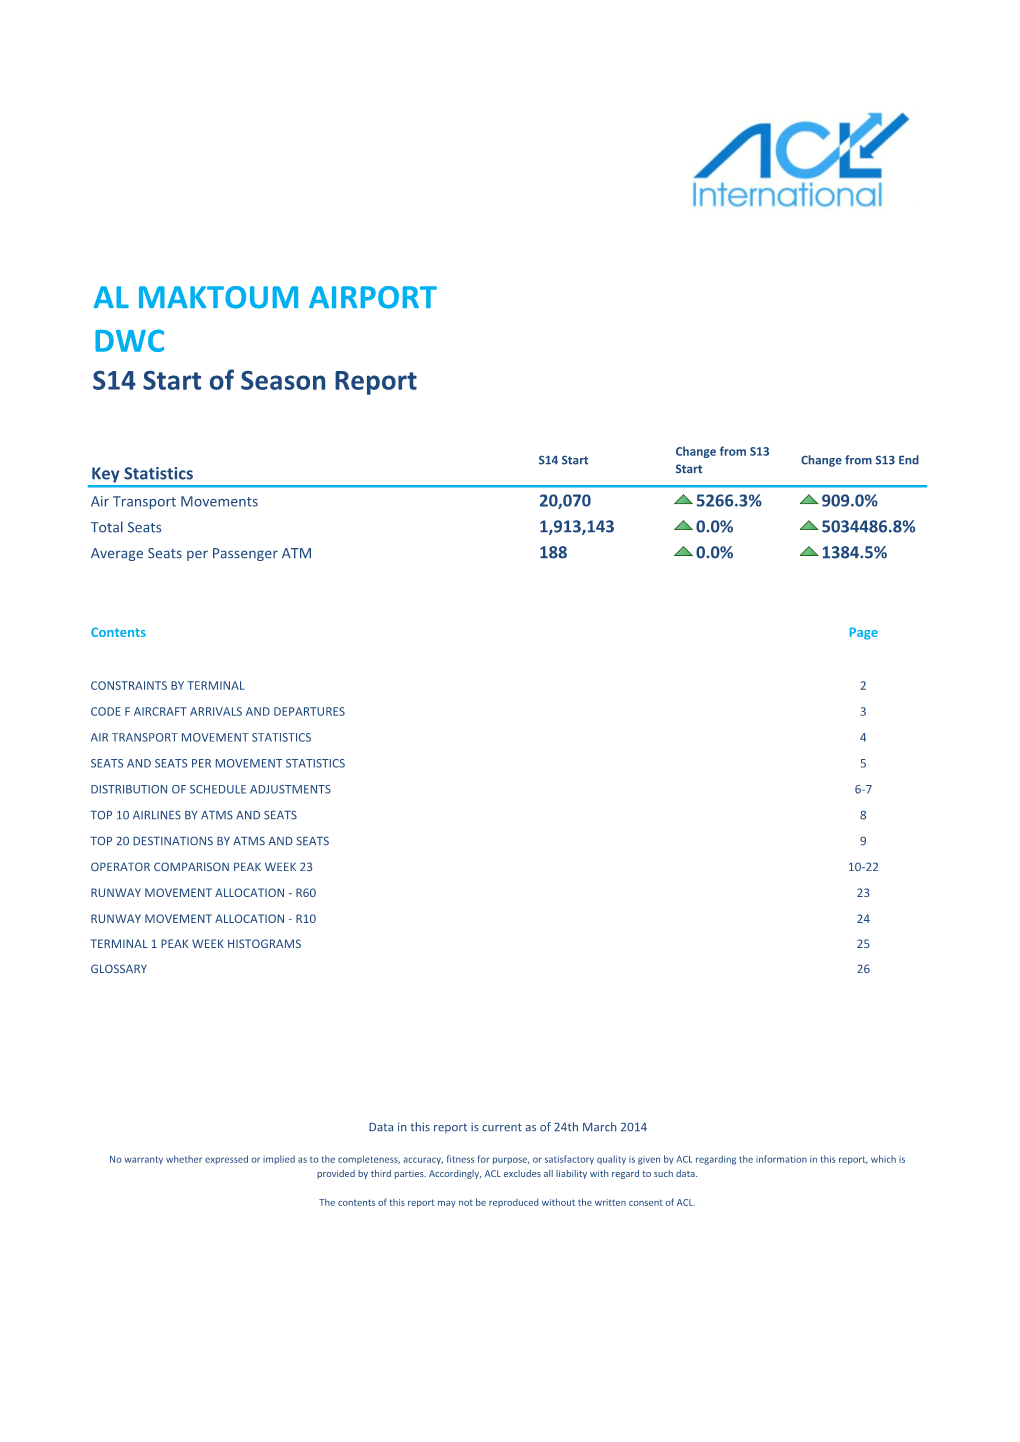 AL MAKTOUM AIRPORT DWC S14 Start of Season Report